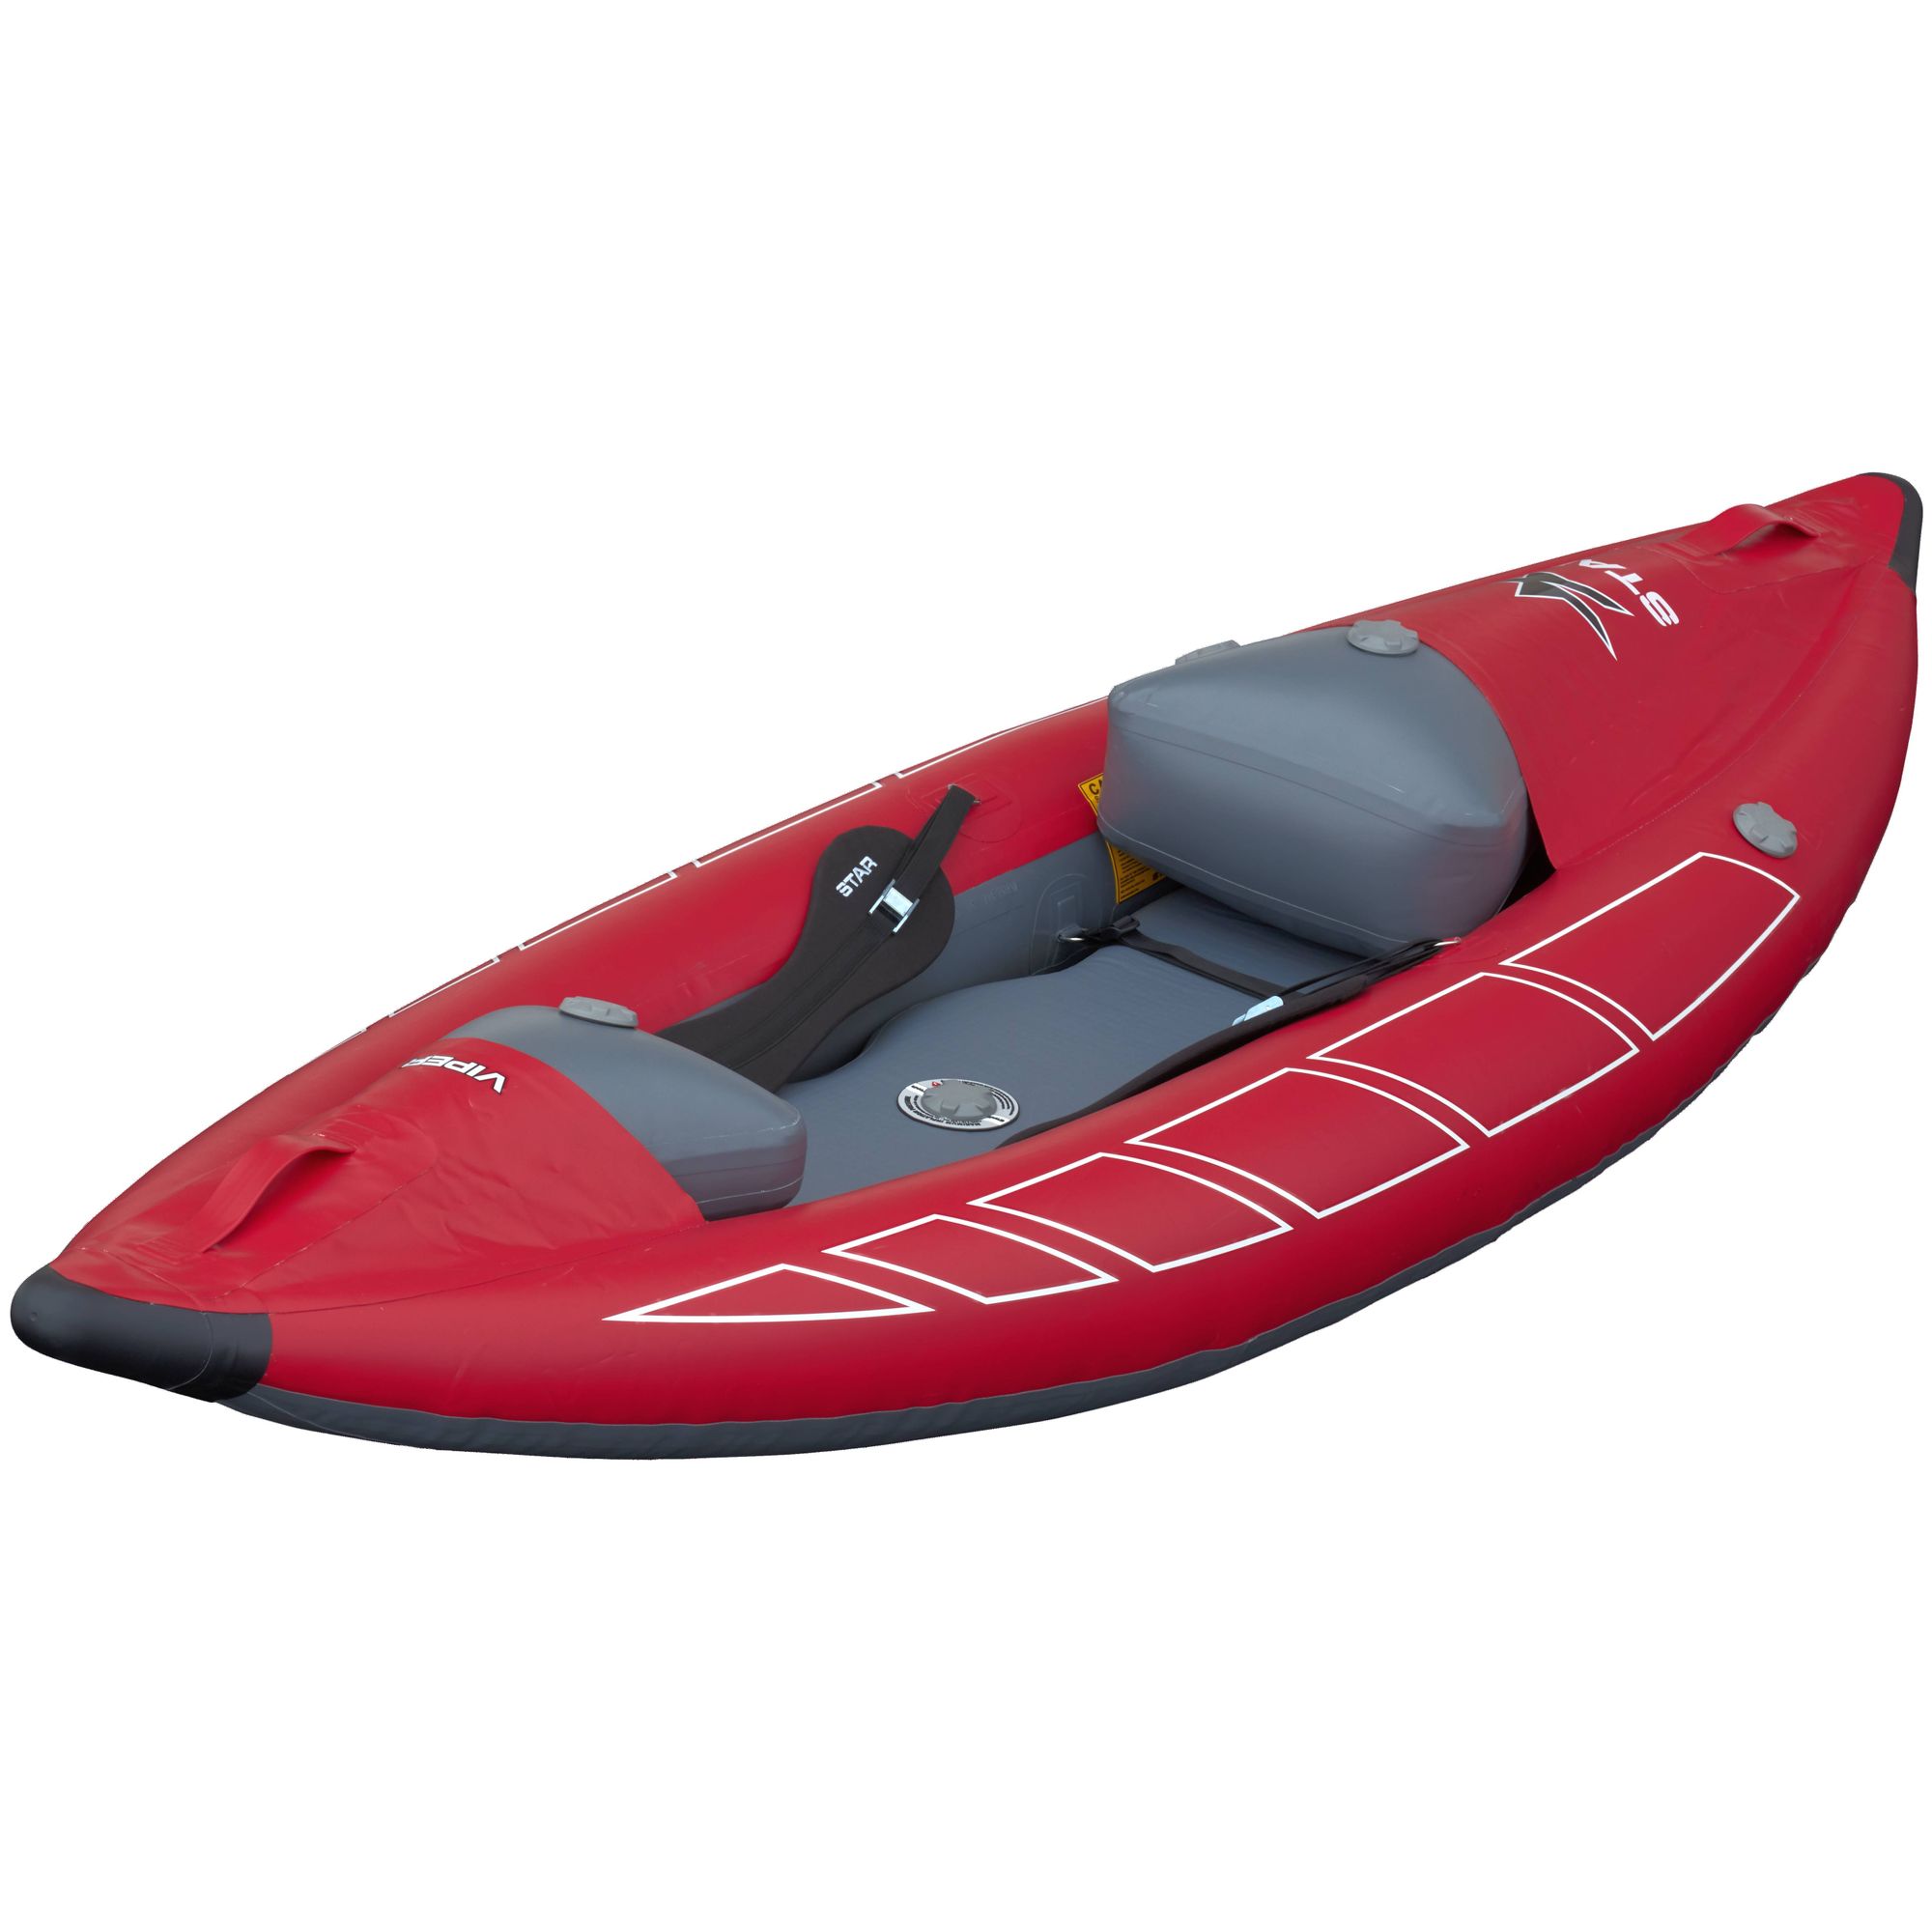 STAR Viper Inflatable Kayak NRS Viper aufblasbares Luftkajak